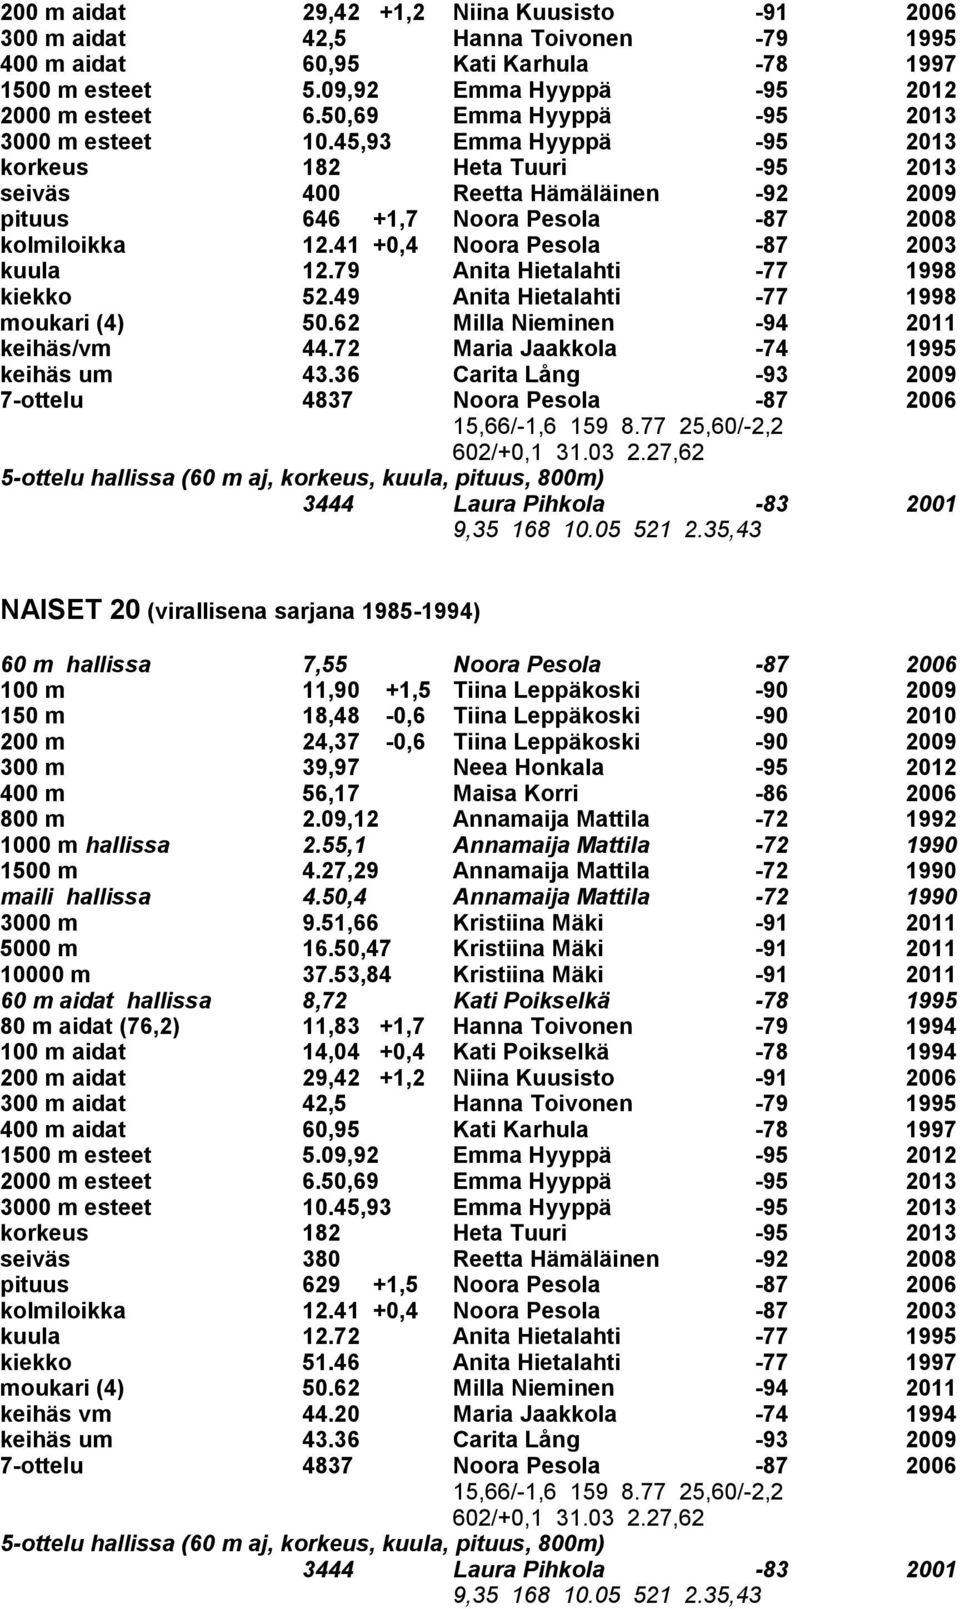 m 56,17 Maisa Korri -86 2006 800 m 2.09,12 Annamaija Mattila -72 1992 3000 m 9.51,66 Kristiina Mäki -91 2011 5000 m 16.50,47 Kristiina Mäki -91 2011 10000 m 37.